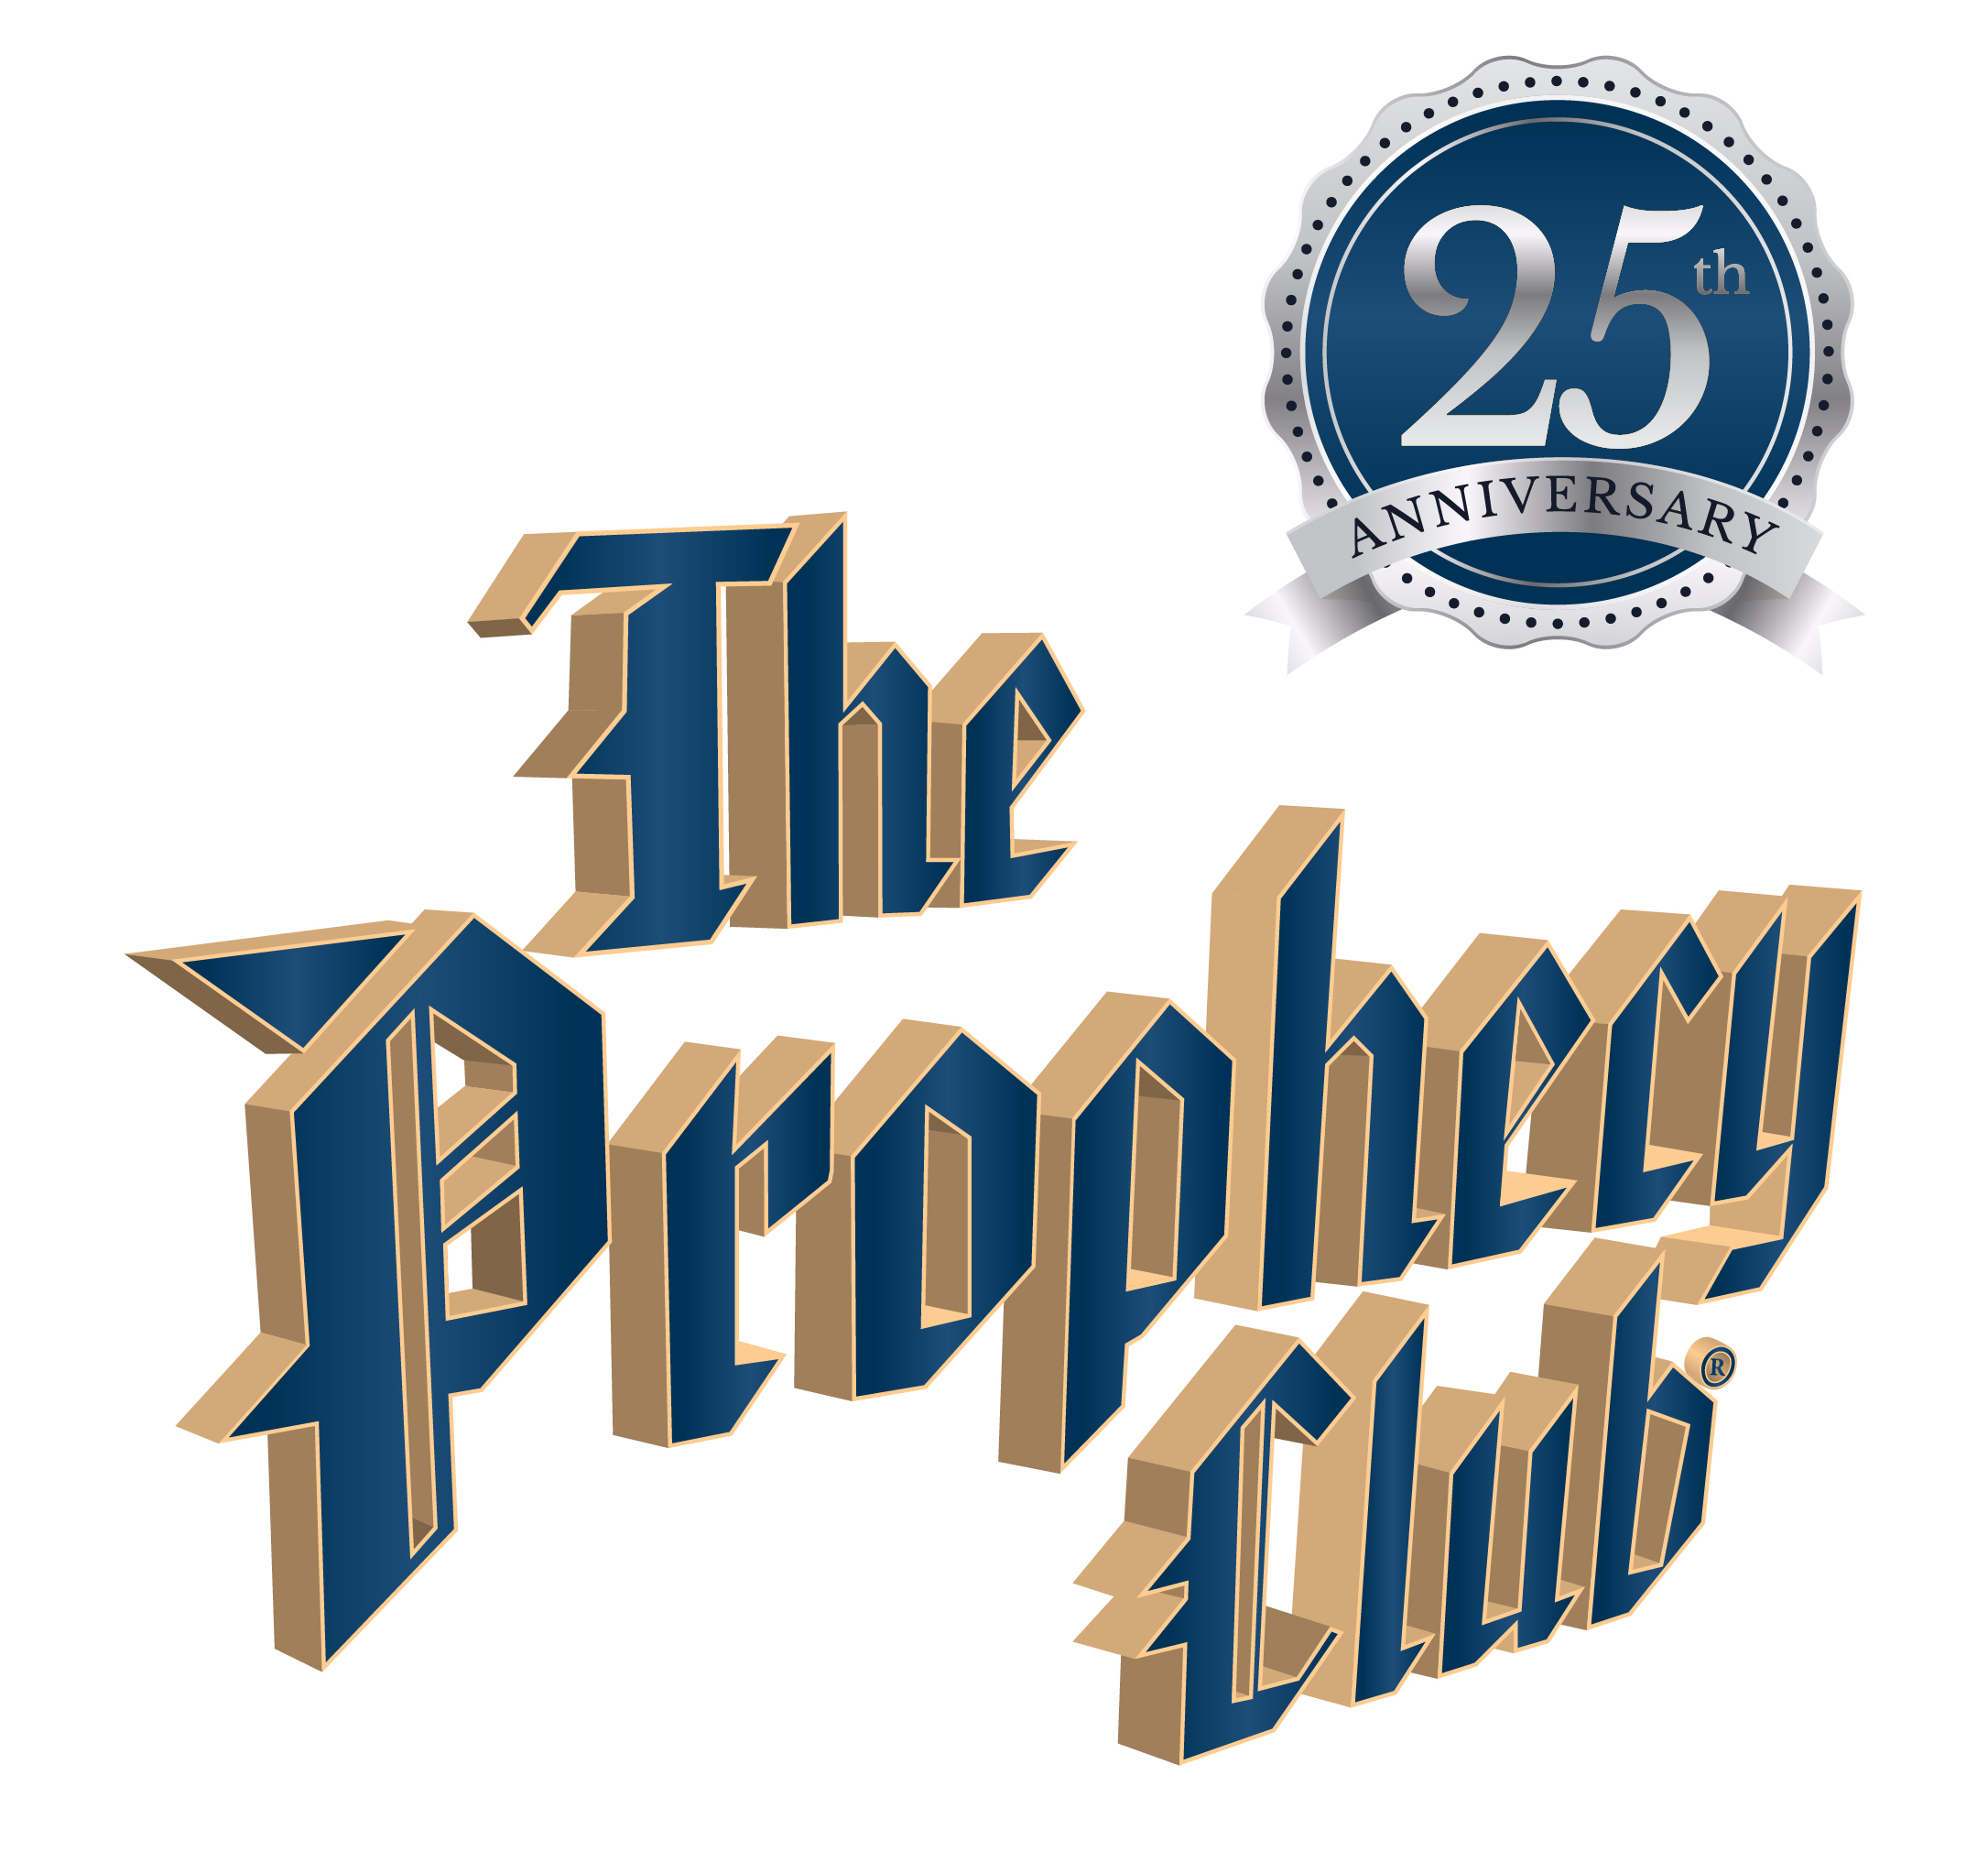 The Prophecy Club logo